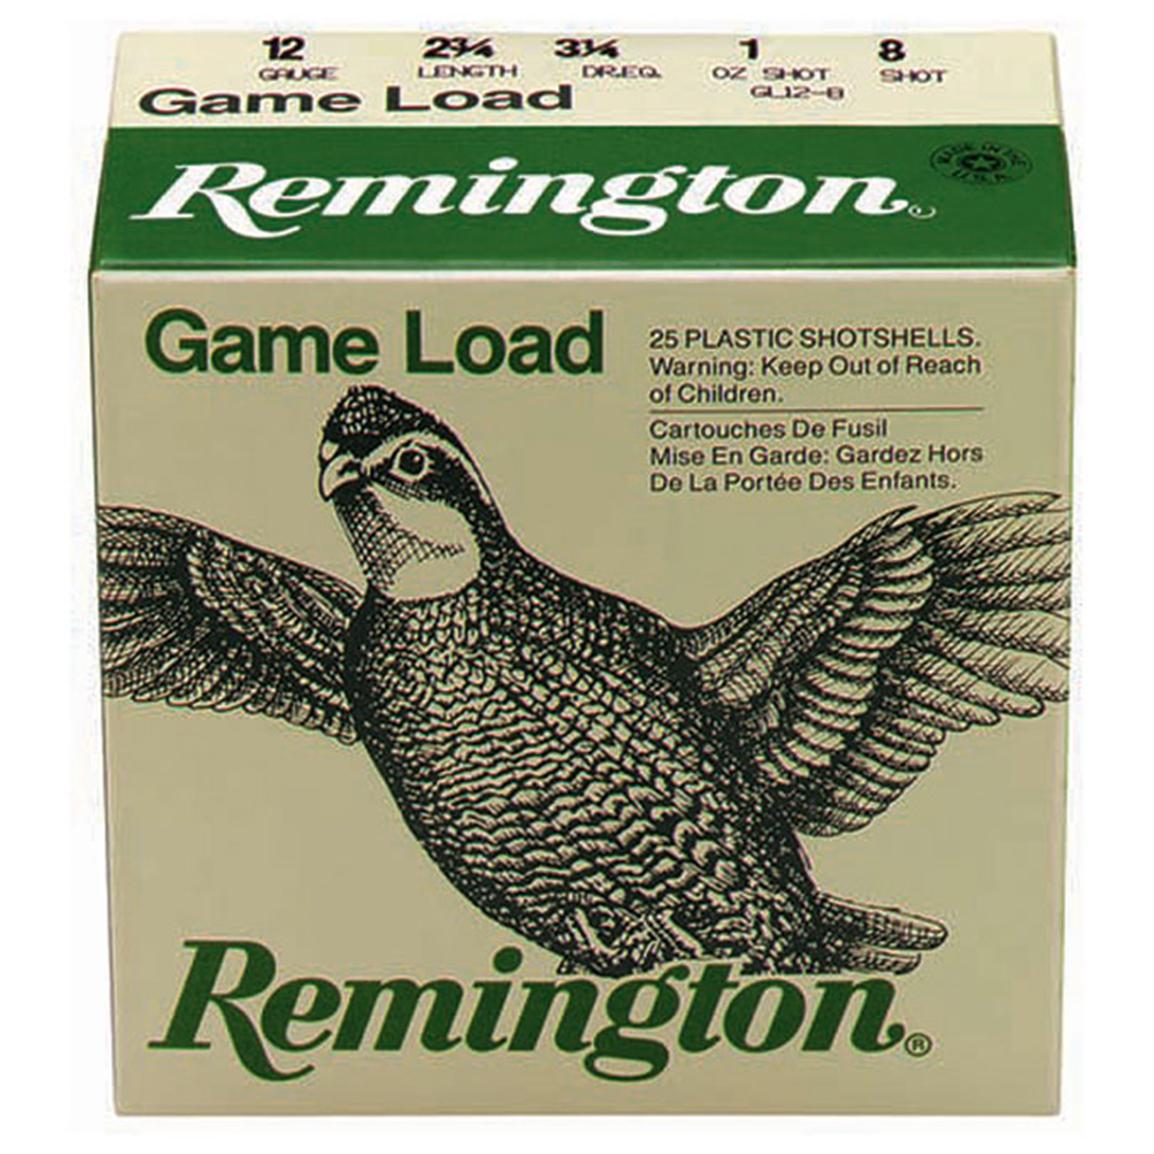 Remington Lead Game Loads 12 Gauge 2 3/4" 1 ozs. 25 rounds